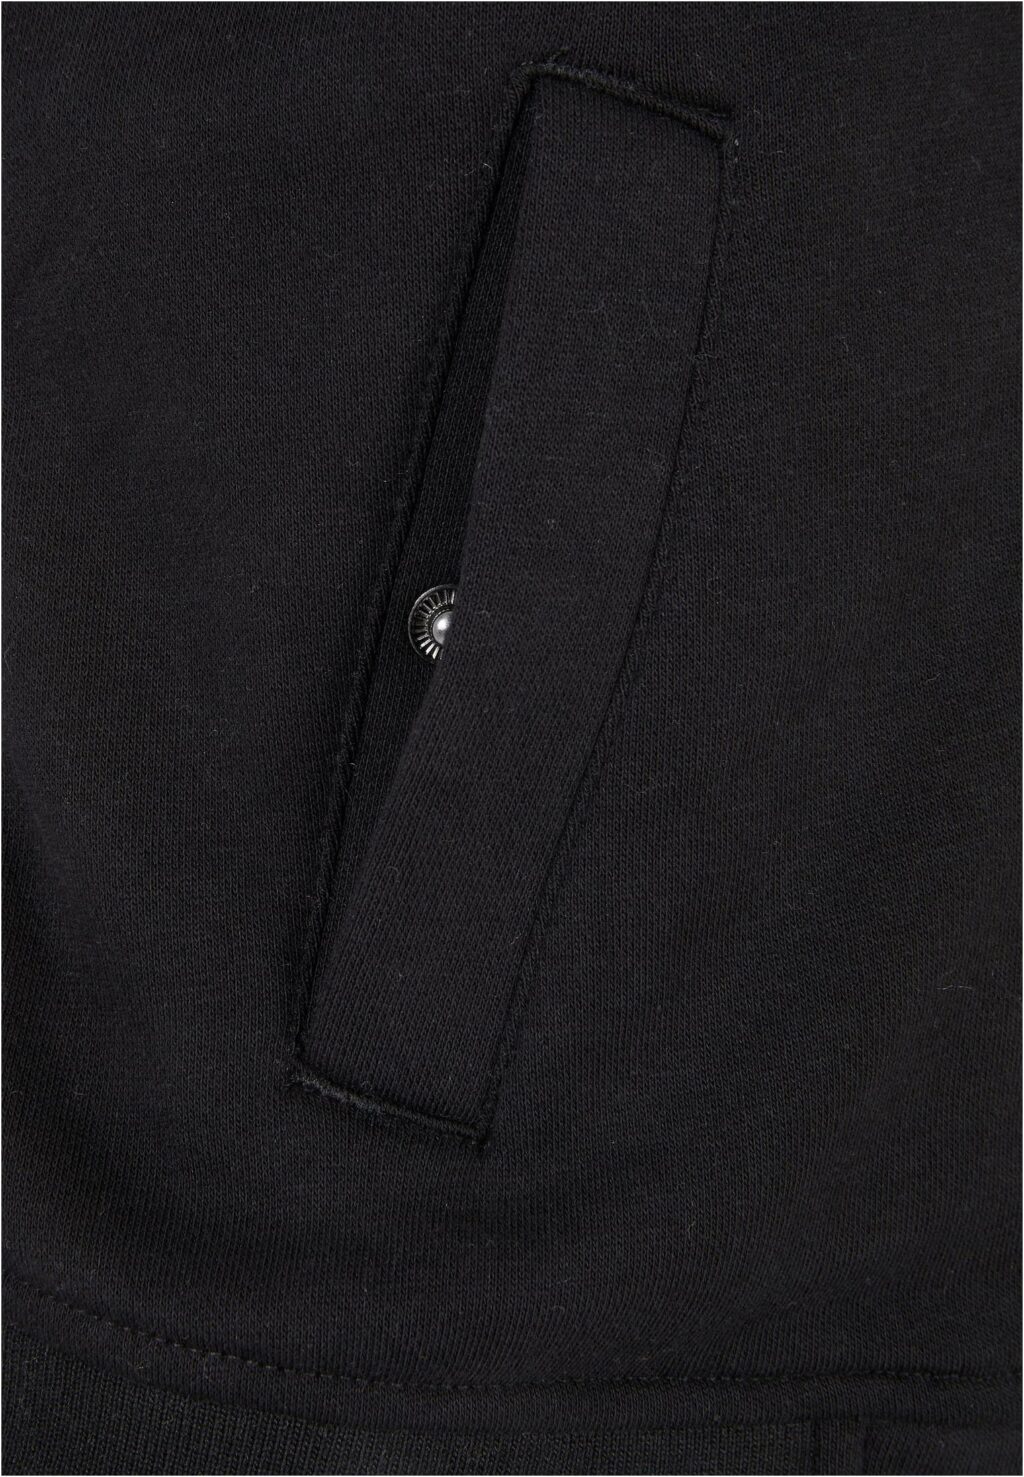 Ladies Starter Sweat College Jacket black/white ST155